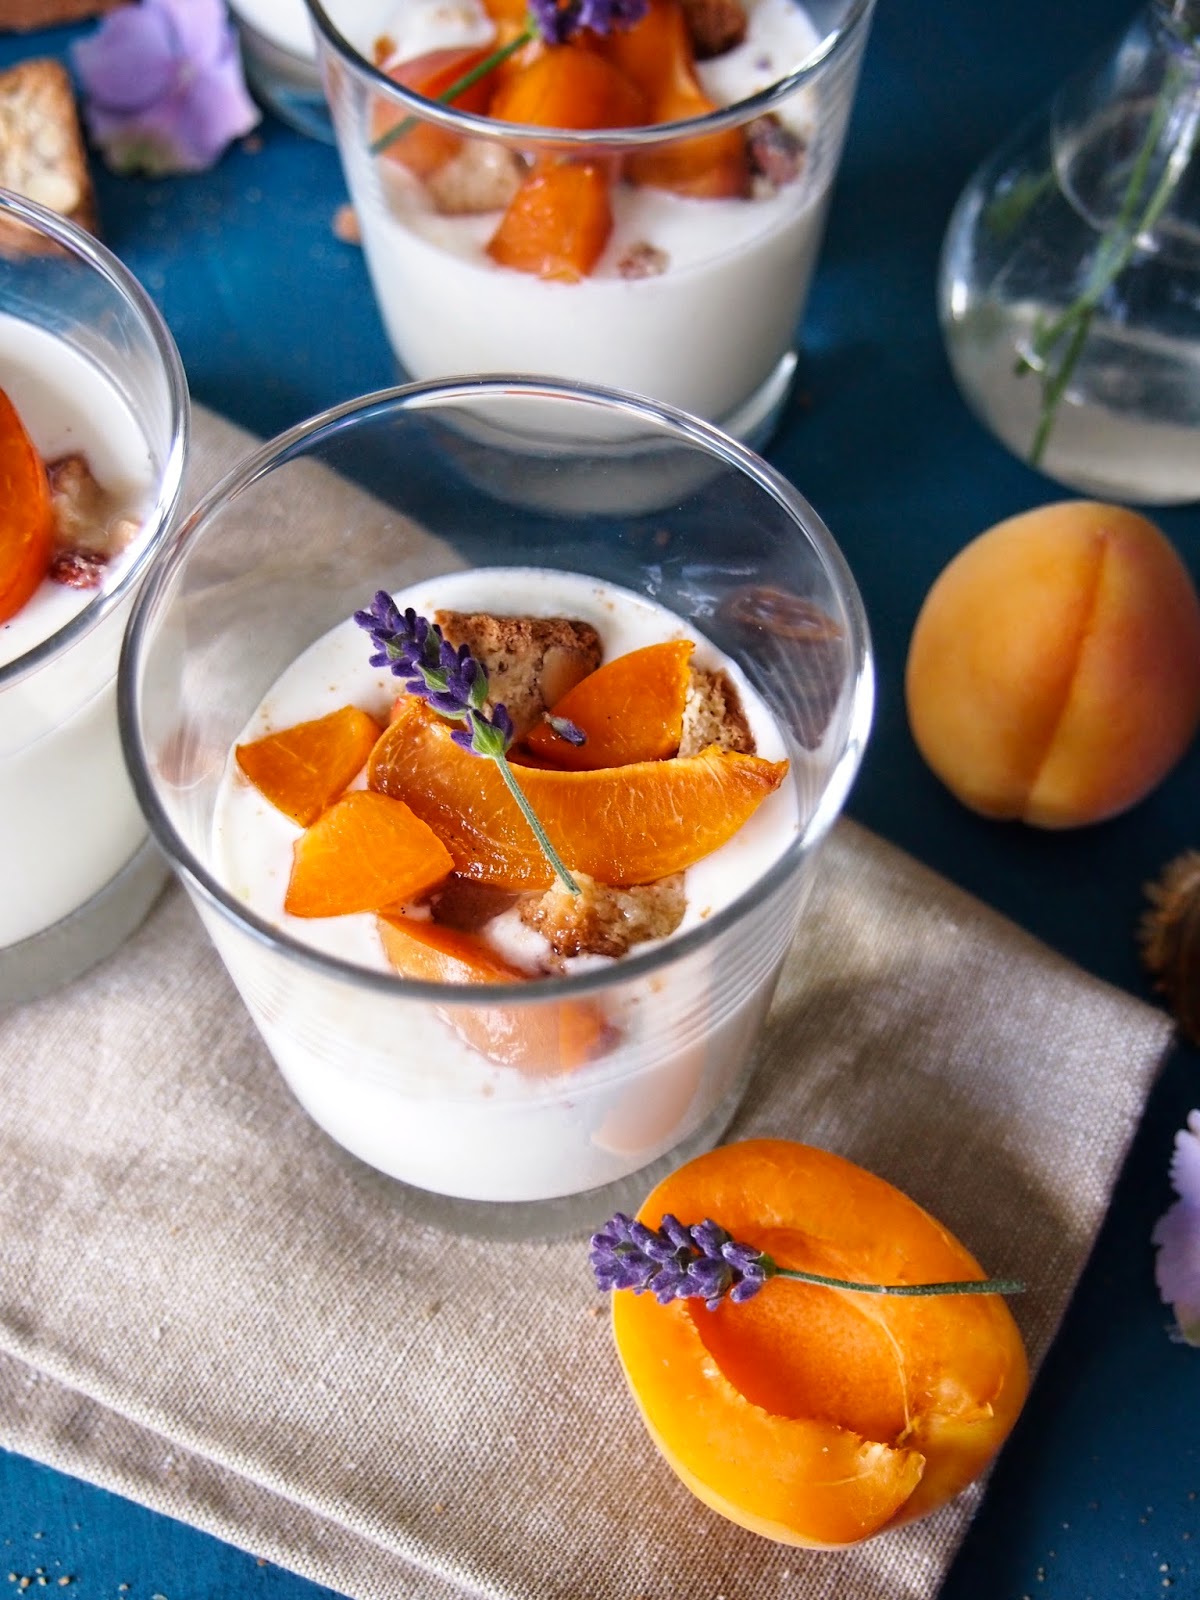 dieZuckerbäckerei: Joghurt-Quark-Dessert mit Vanille-Aprikosen